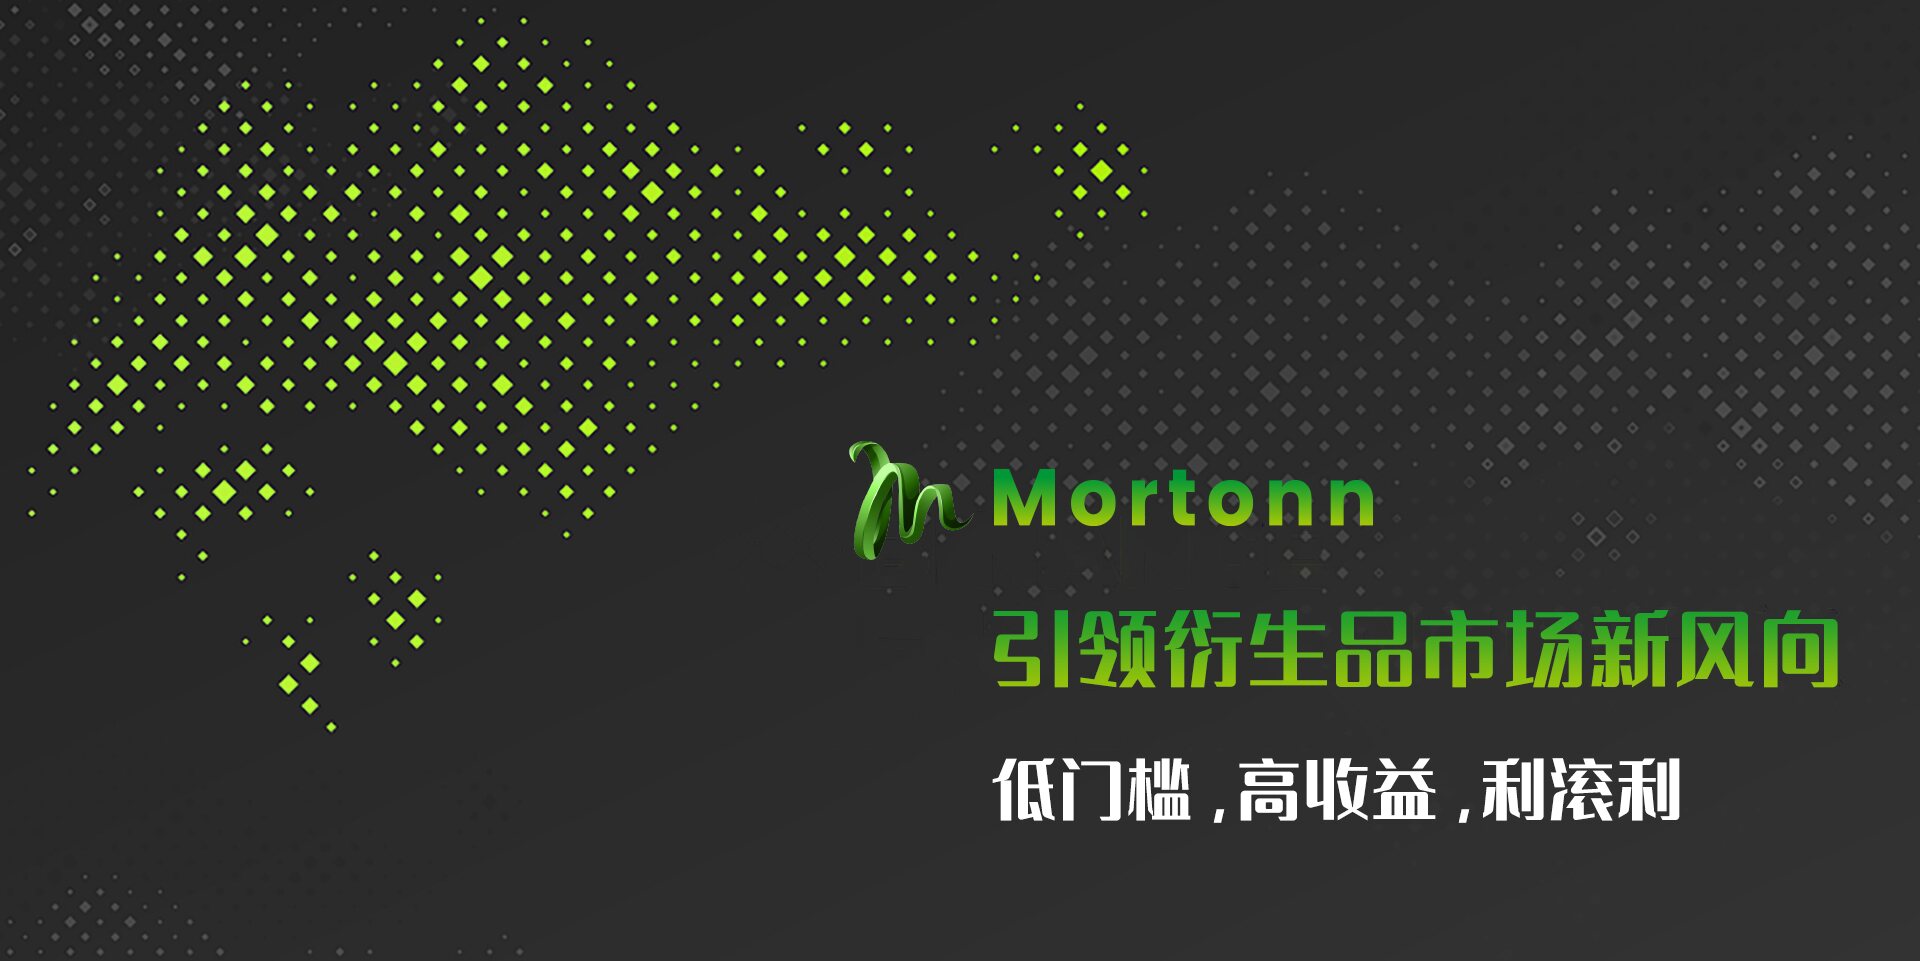 Mortonn摩顿团队表示：Web3、DeFi、元宇宙还会持续扩展影响力